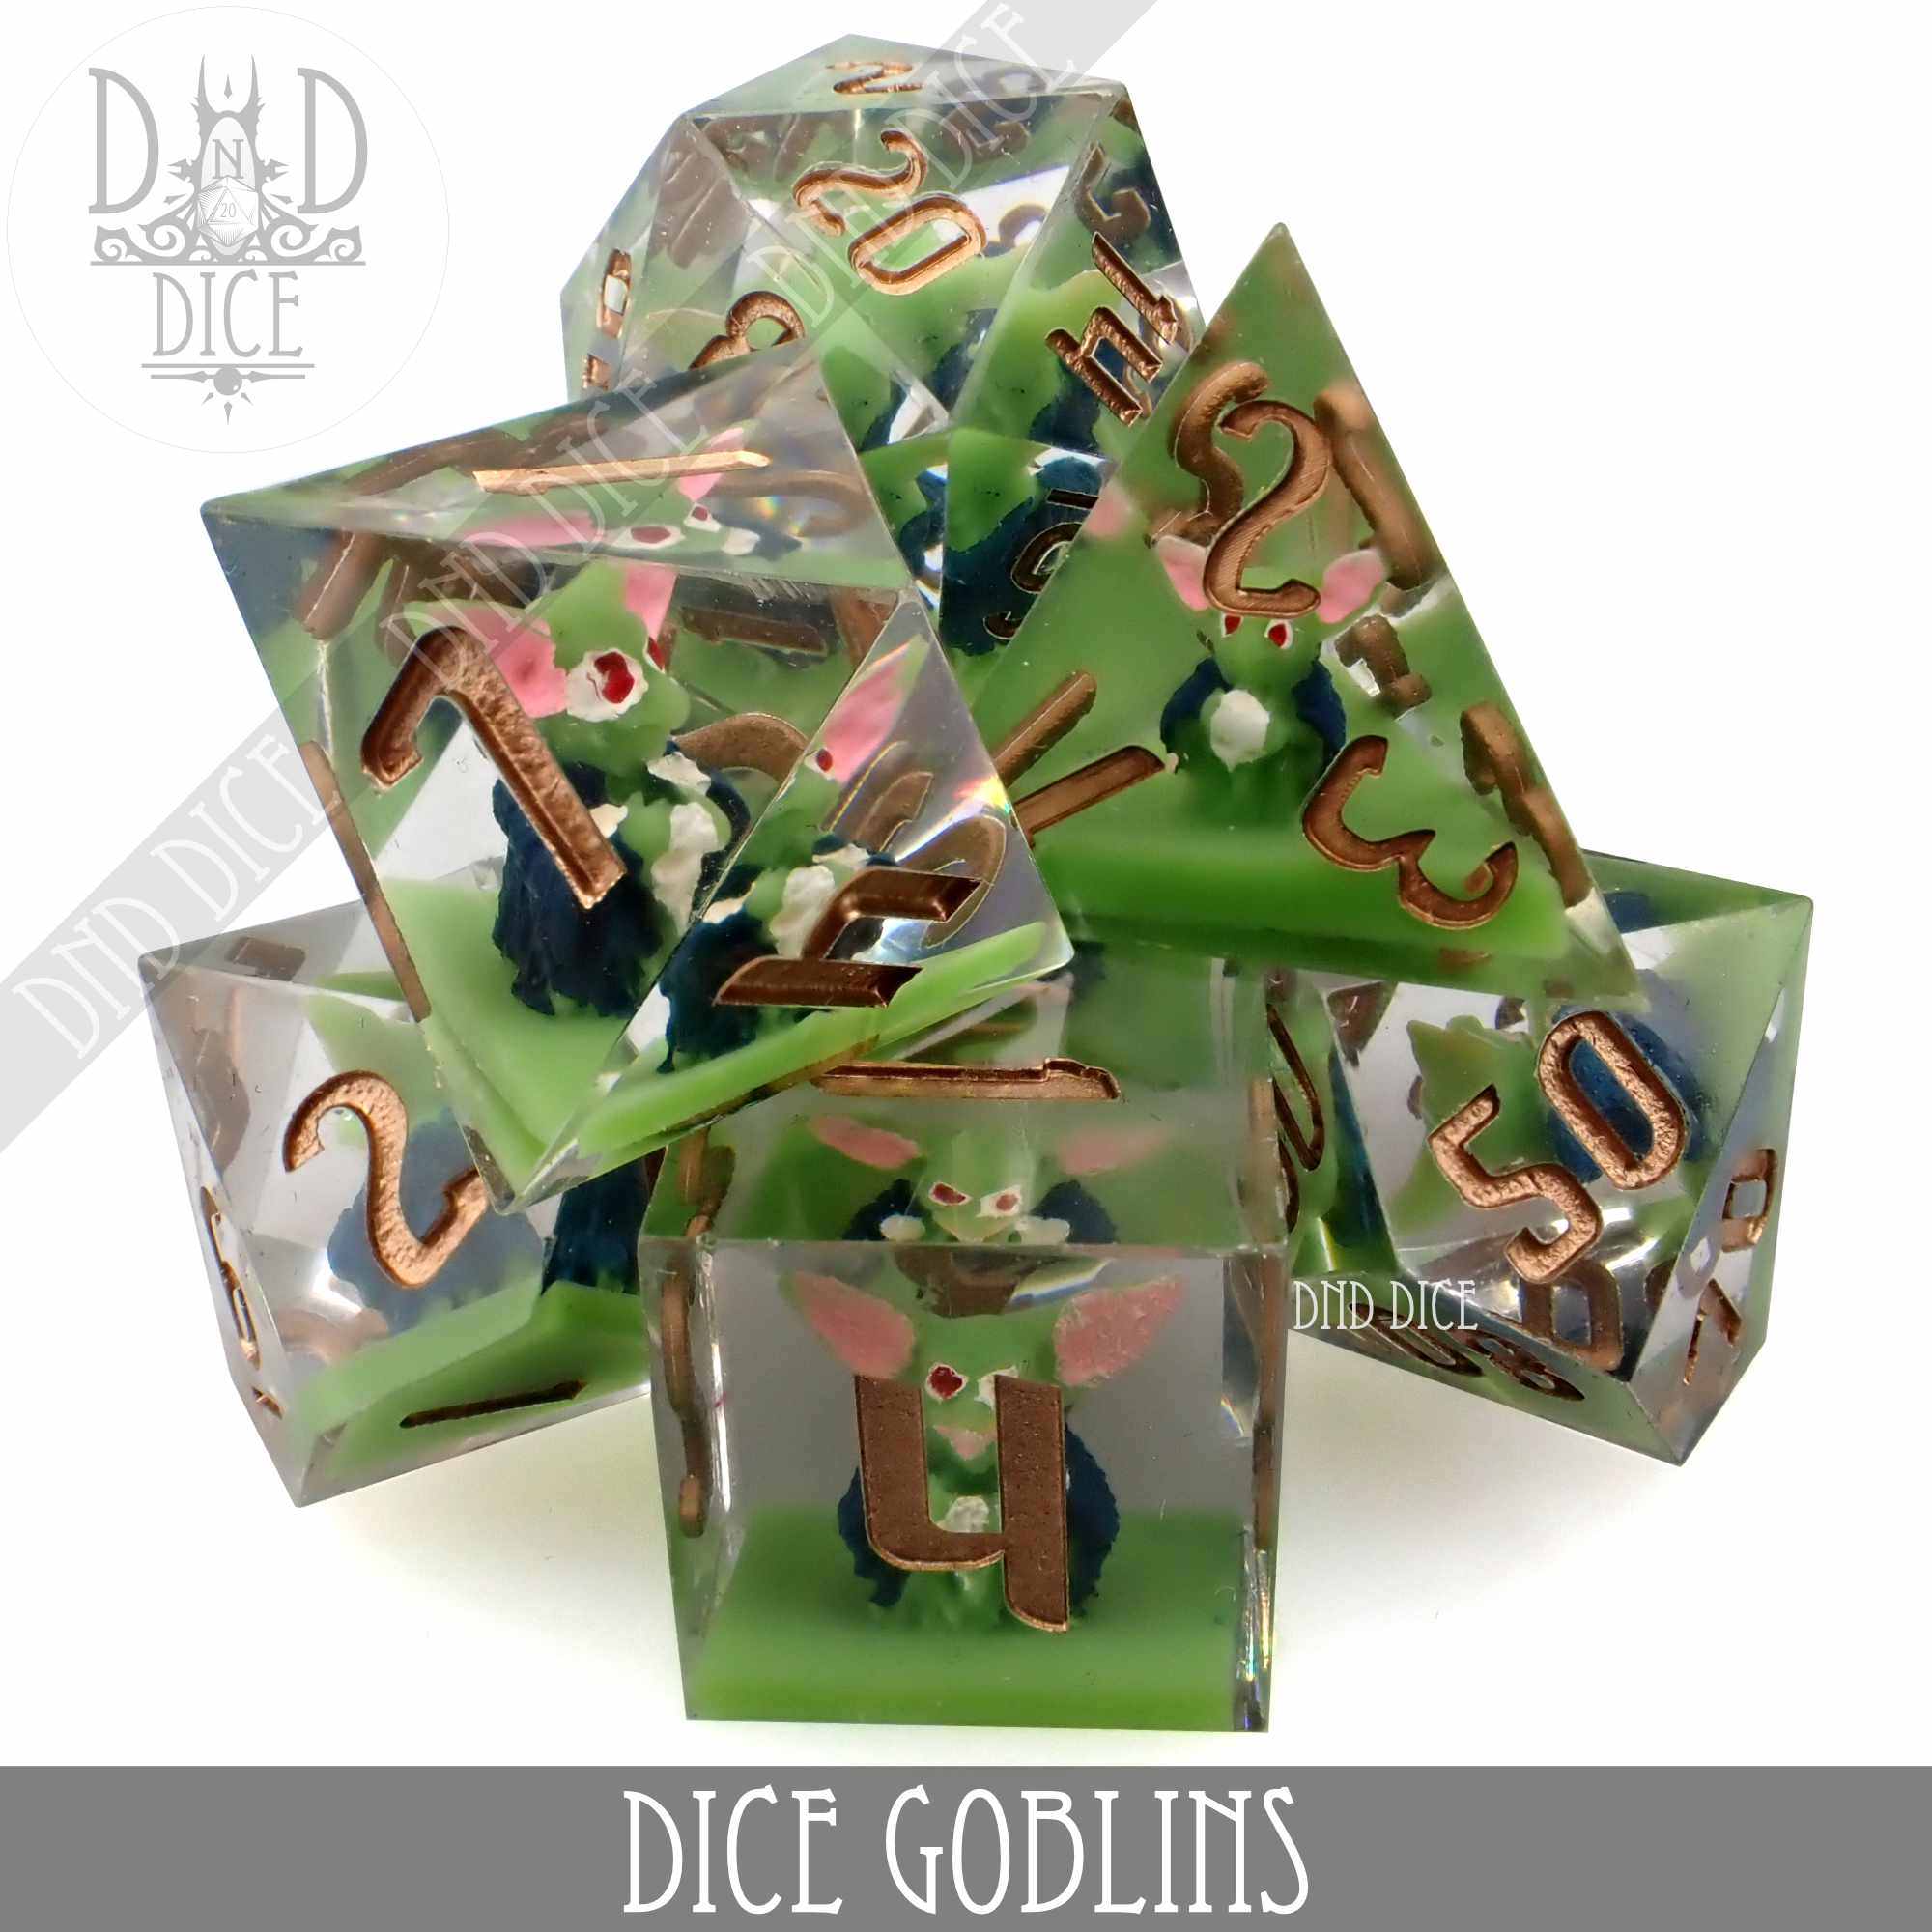 Dice Goblins Handmade Dice Set